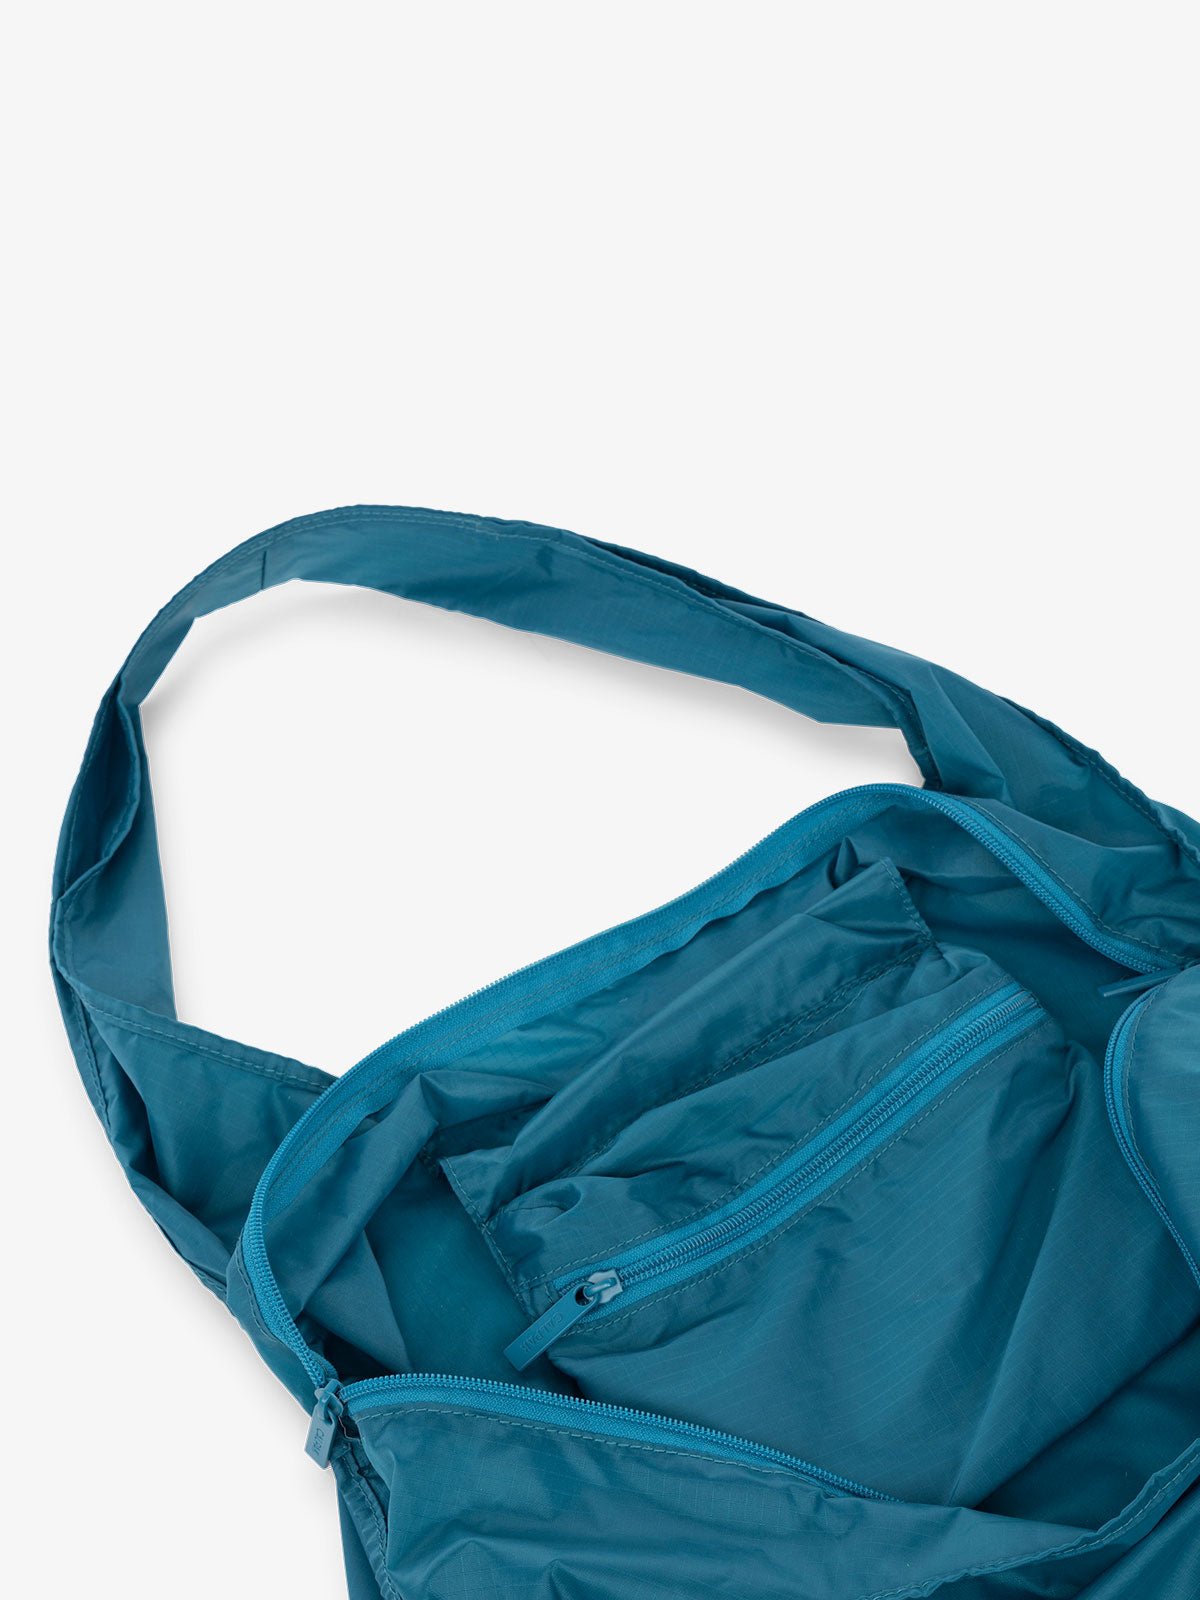 CALPAK Compakt shopping tote bag with interior zipper pocket in lagoon blue